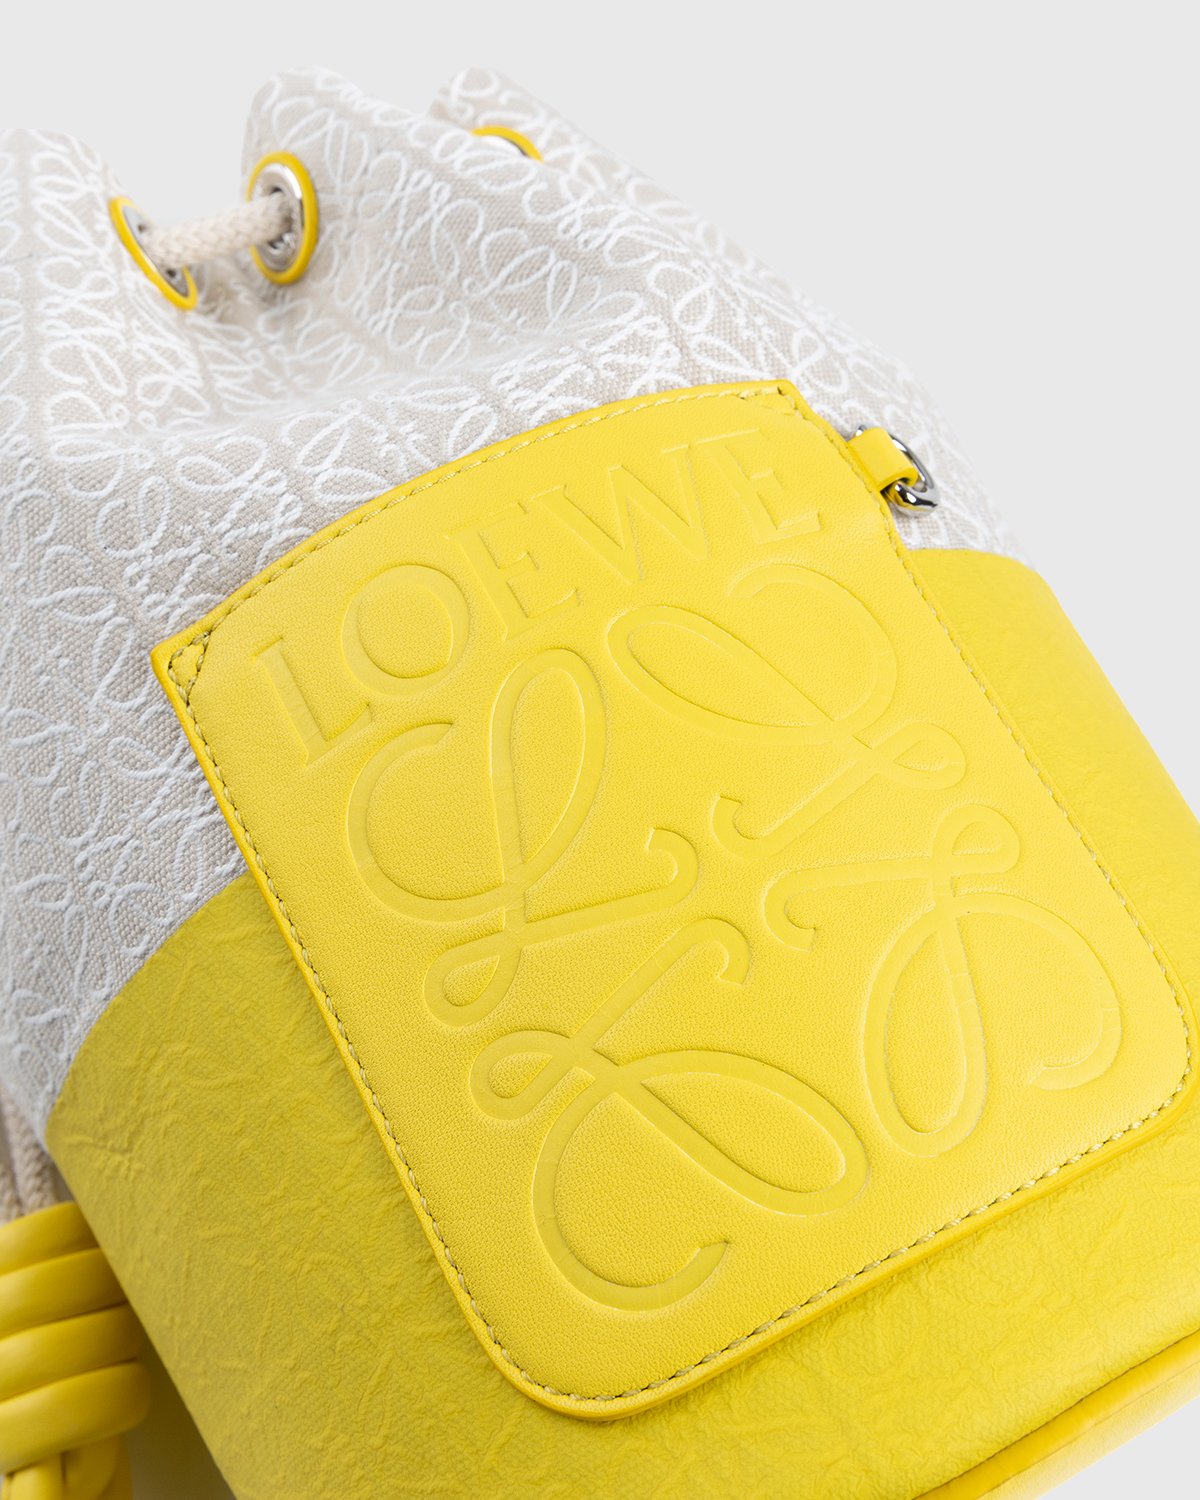 Loewe - Paula's Ibiza Small Sailor Bag Ecru/Lemon - Accessories - Yellow - Image 3